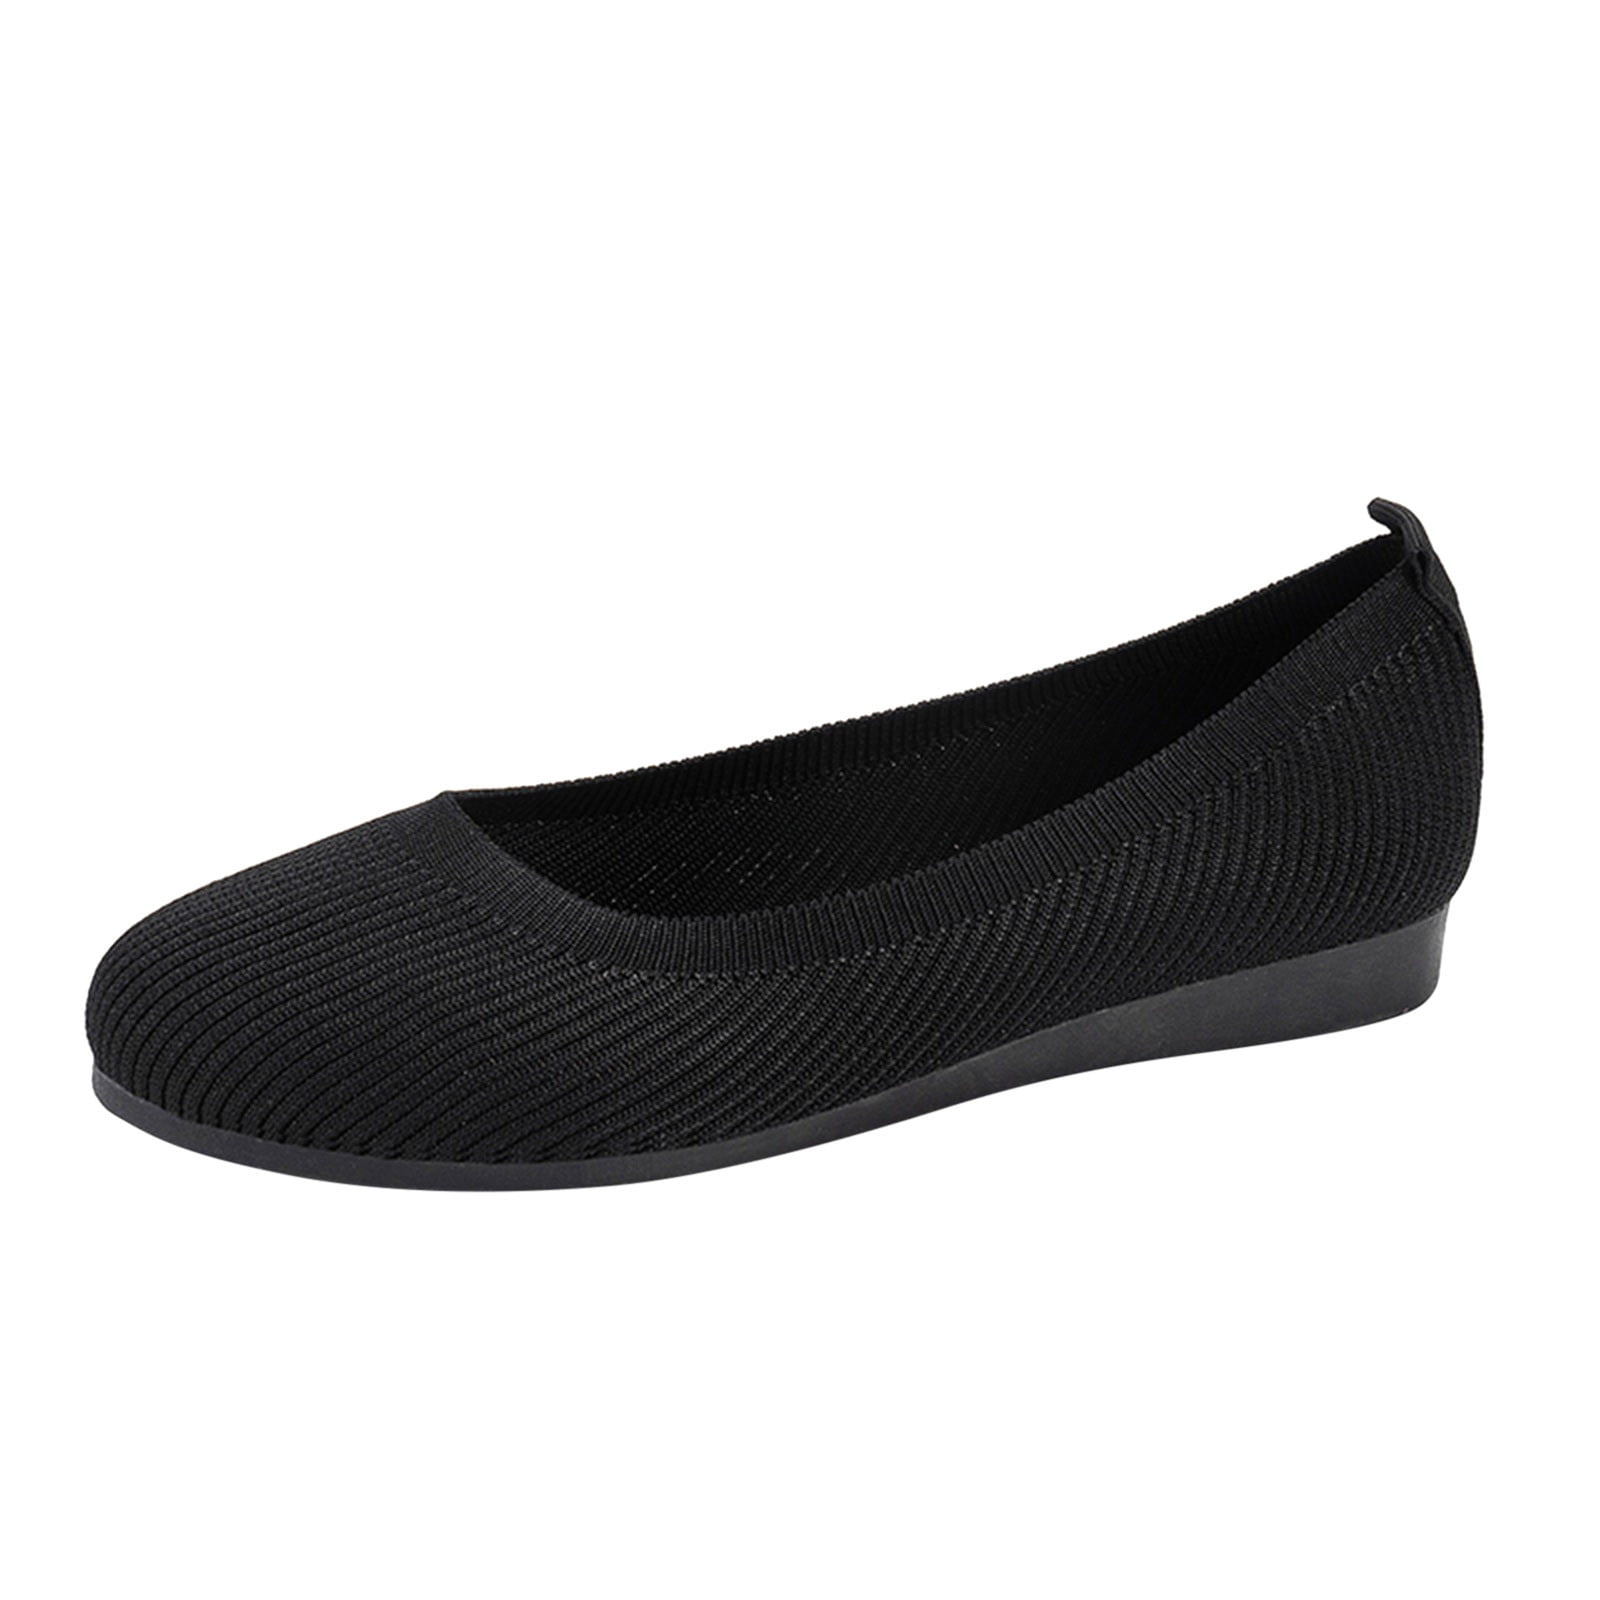 TOWED22 Flat Shoes For Women, Women's Ballet Flats PU Leather Dress ...